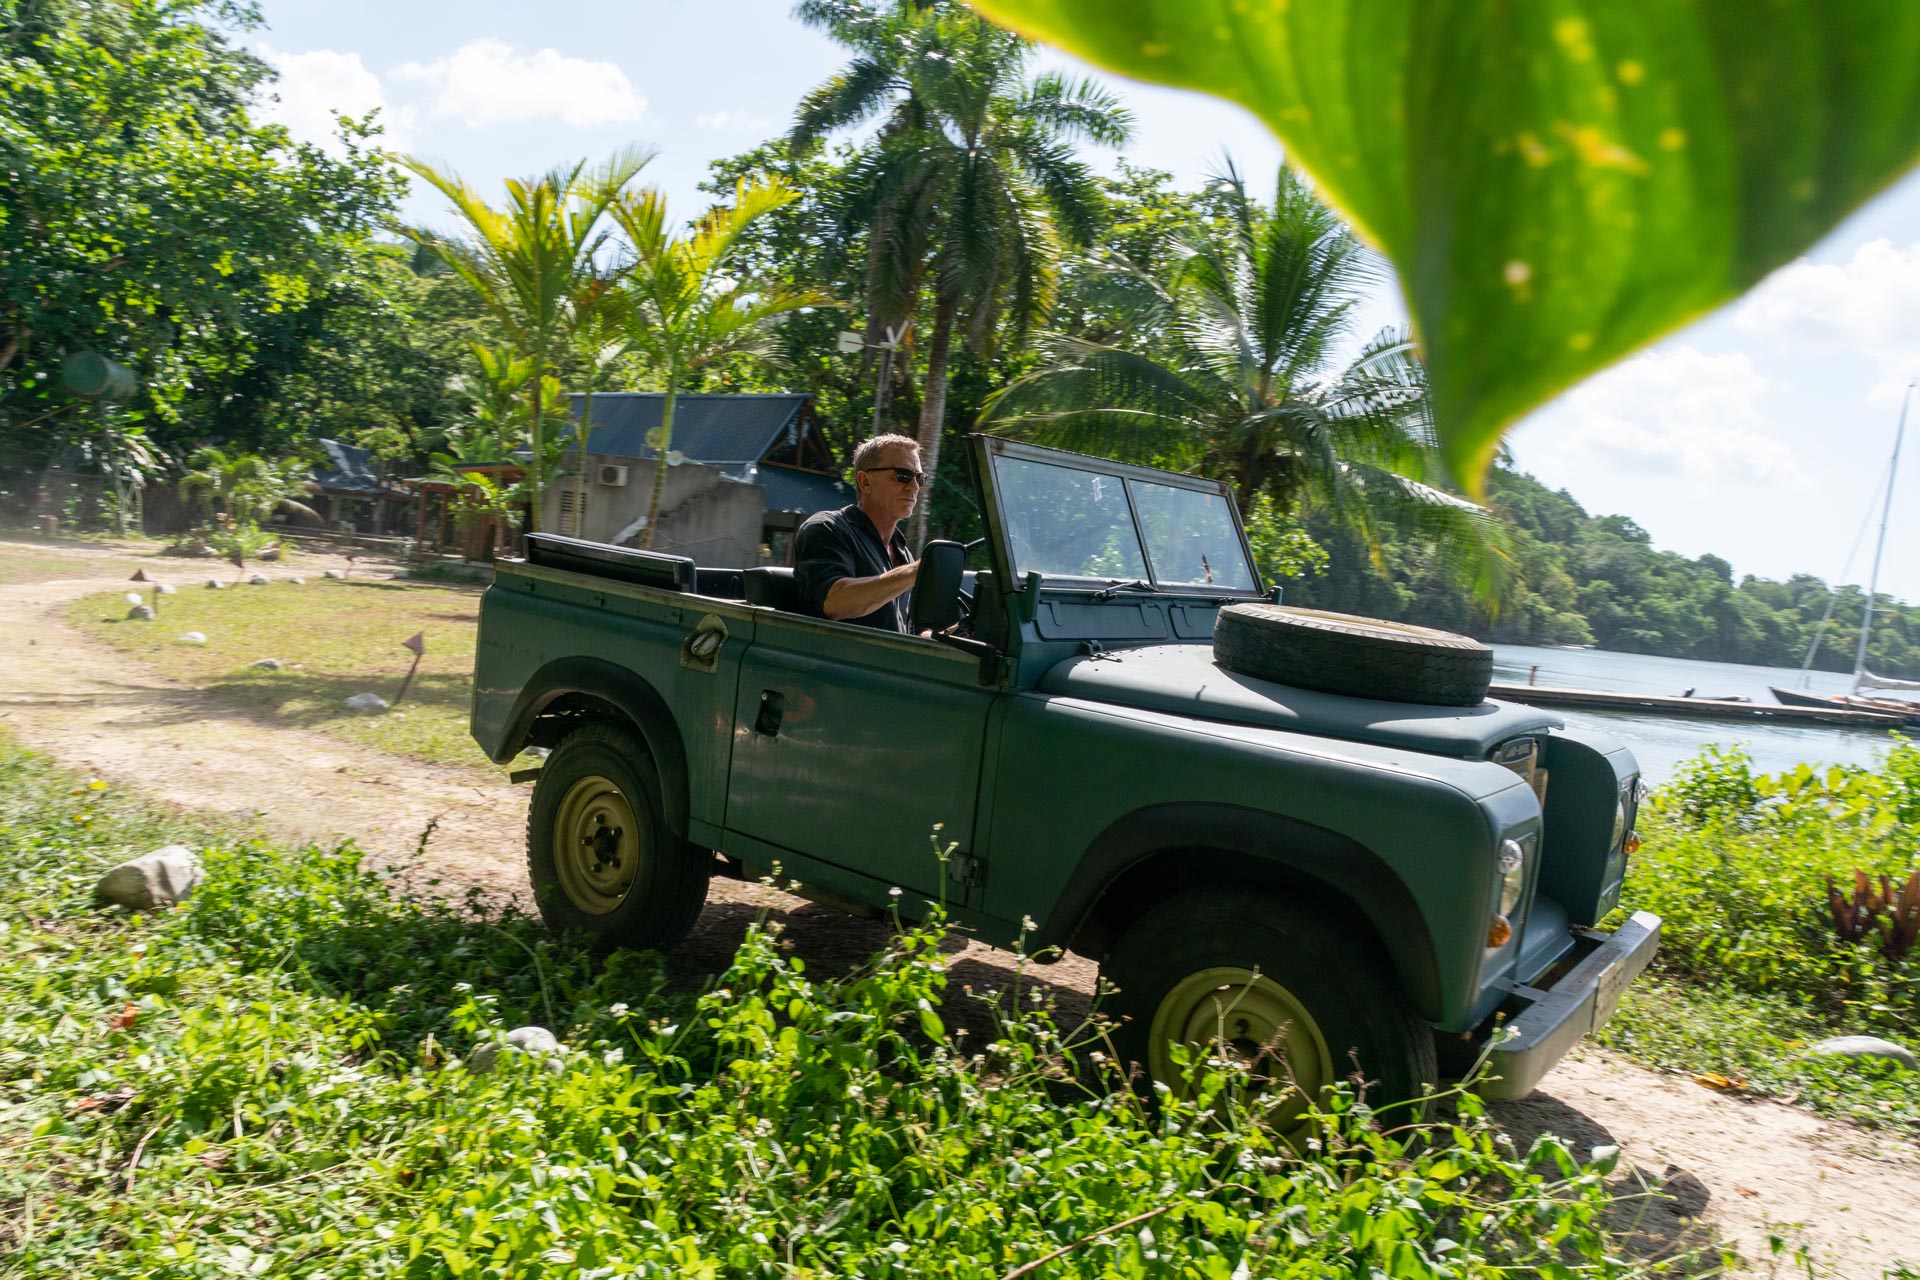 James-Bond-in-his-Land-Rover-Series-III-in-Jamaica.jpg